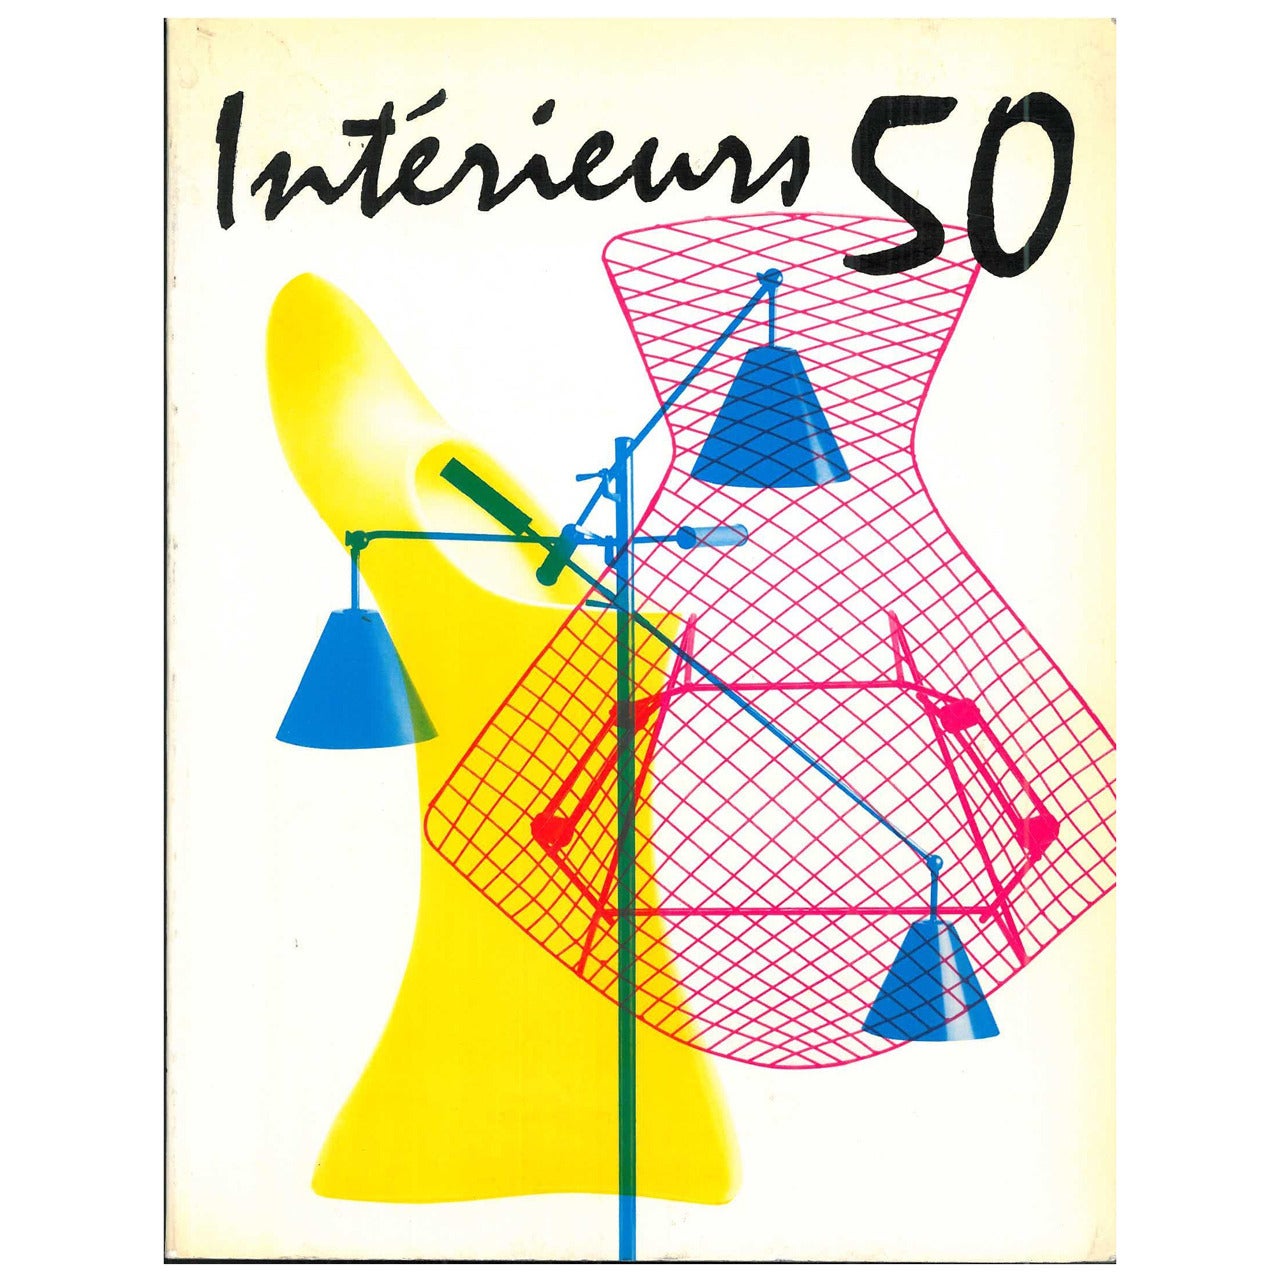 Interieurs 50 (livre)